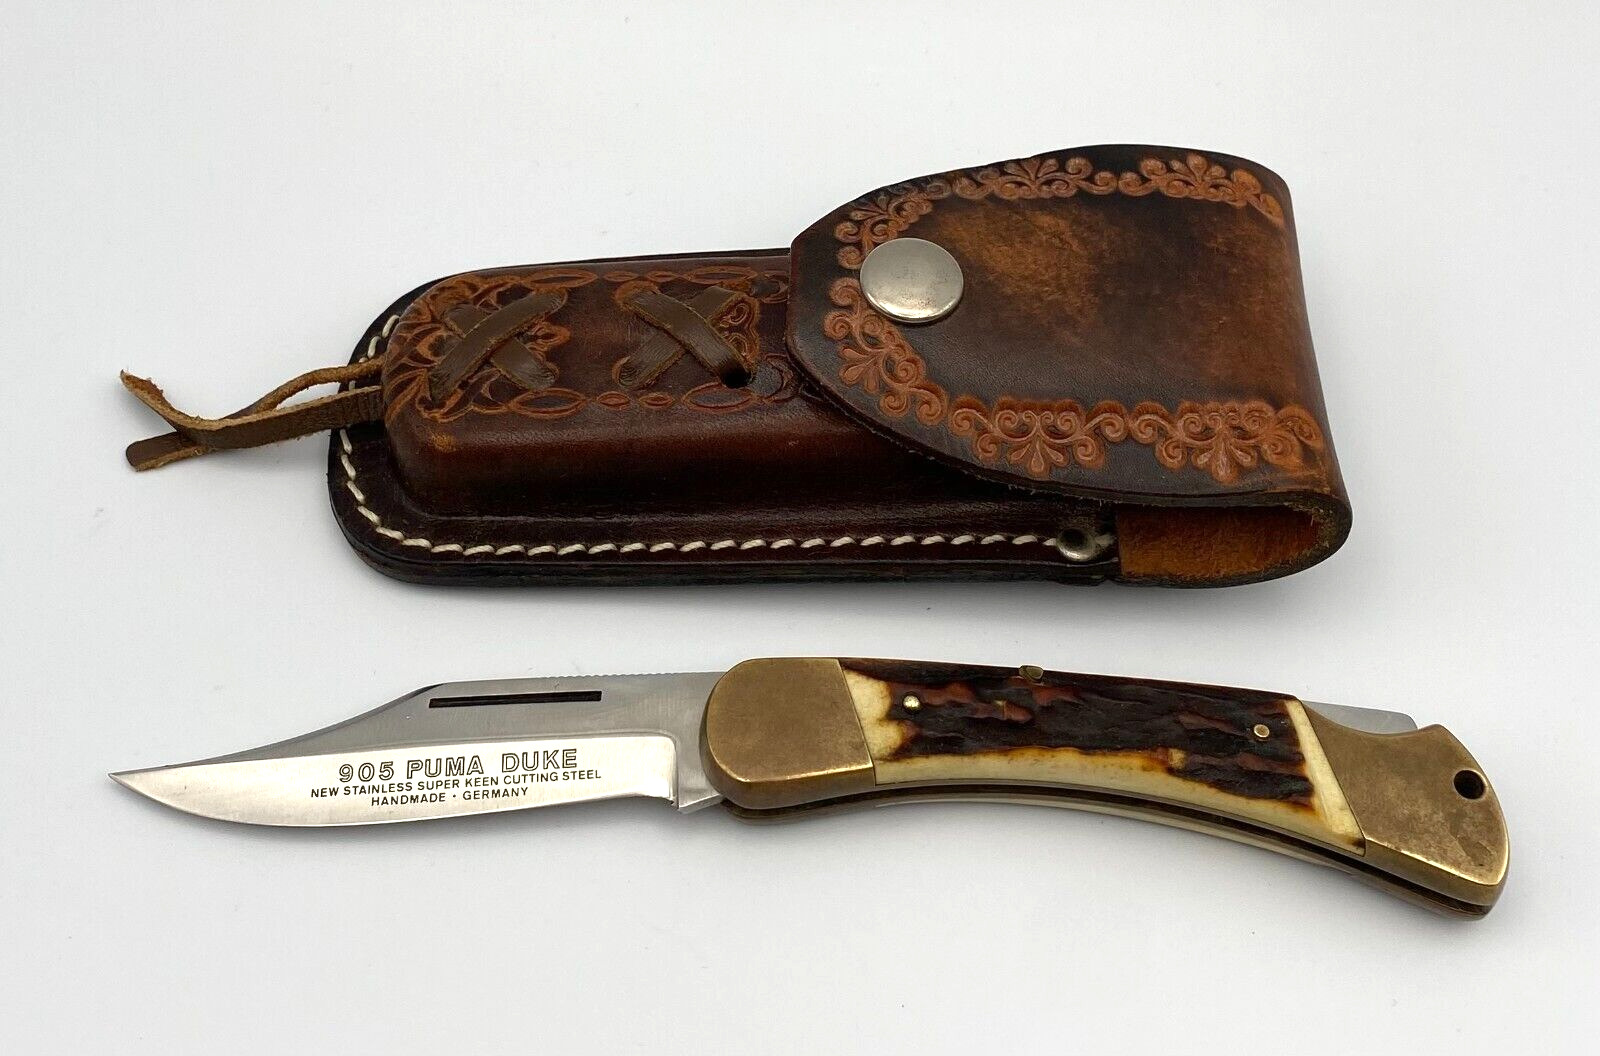 Vintage Puma 905 Duke Folding Blade Knife 26182 Stag Handle Germany w/ Sheath